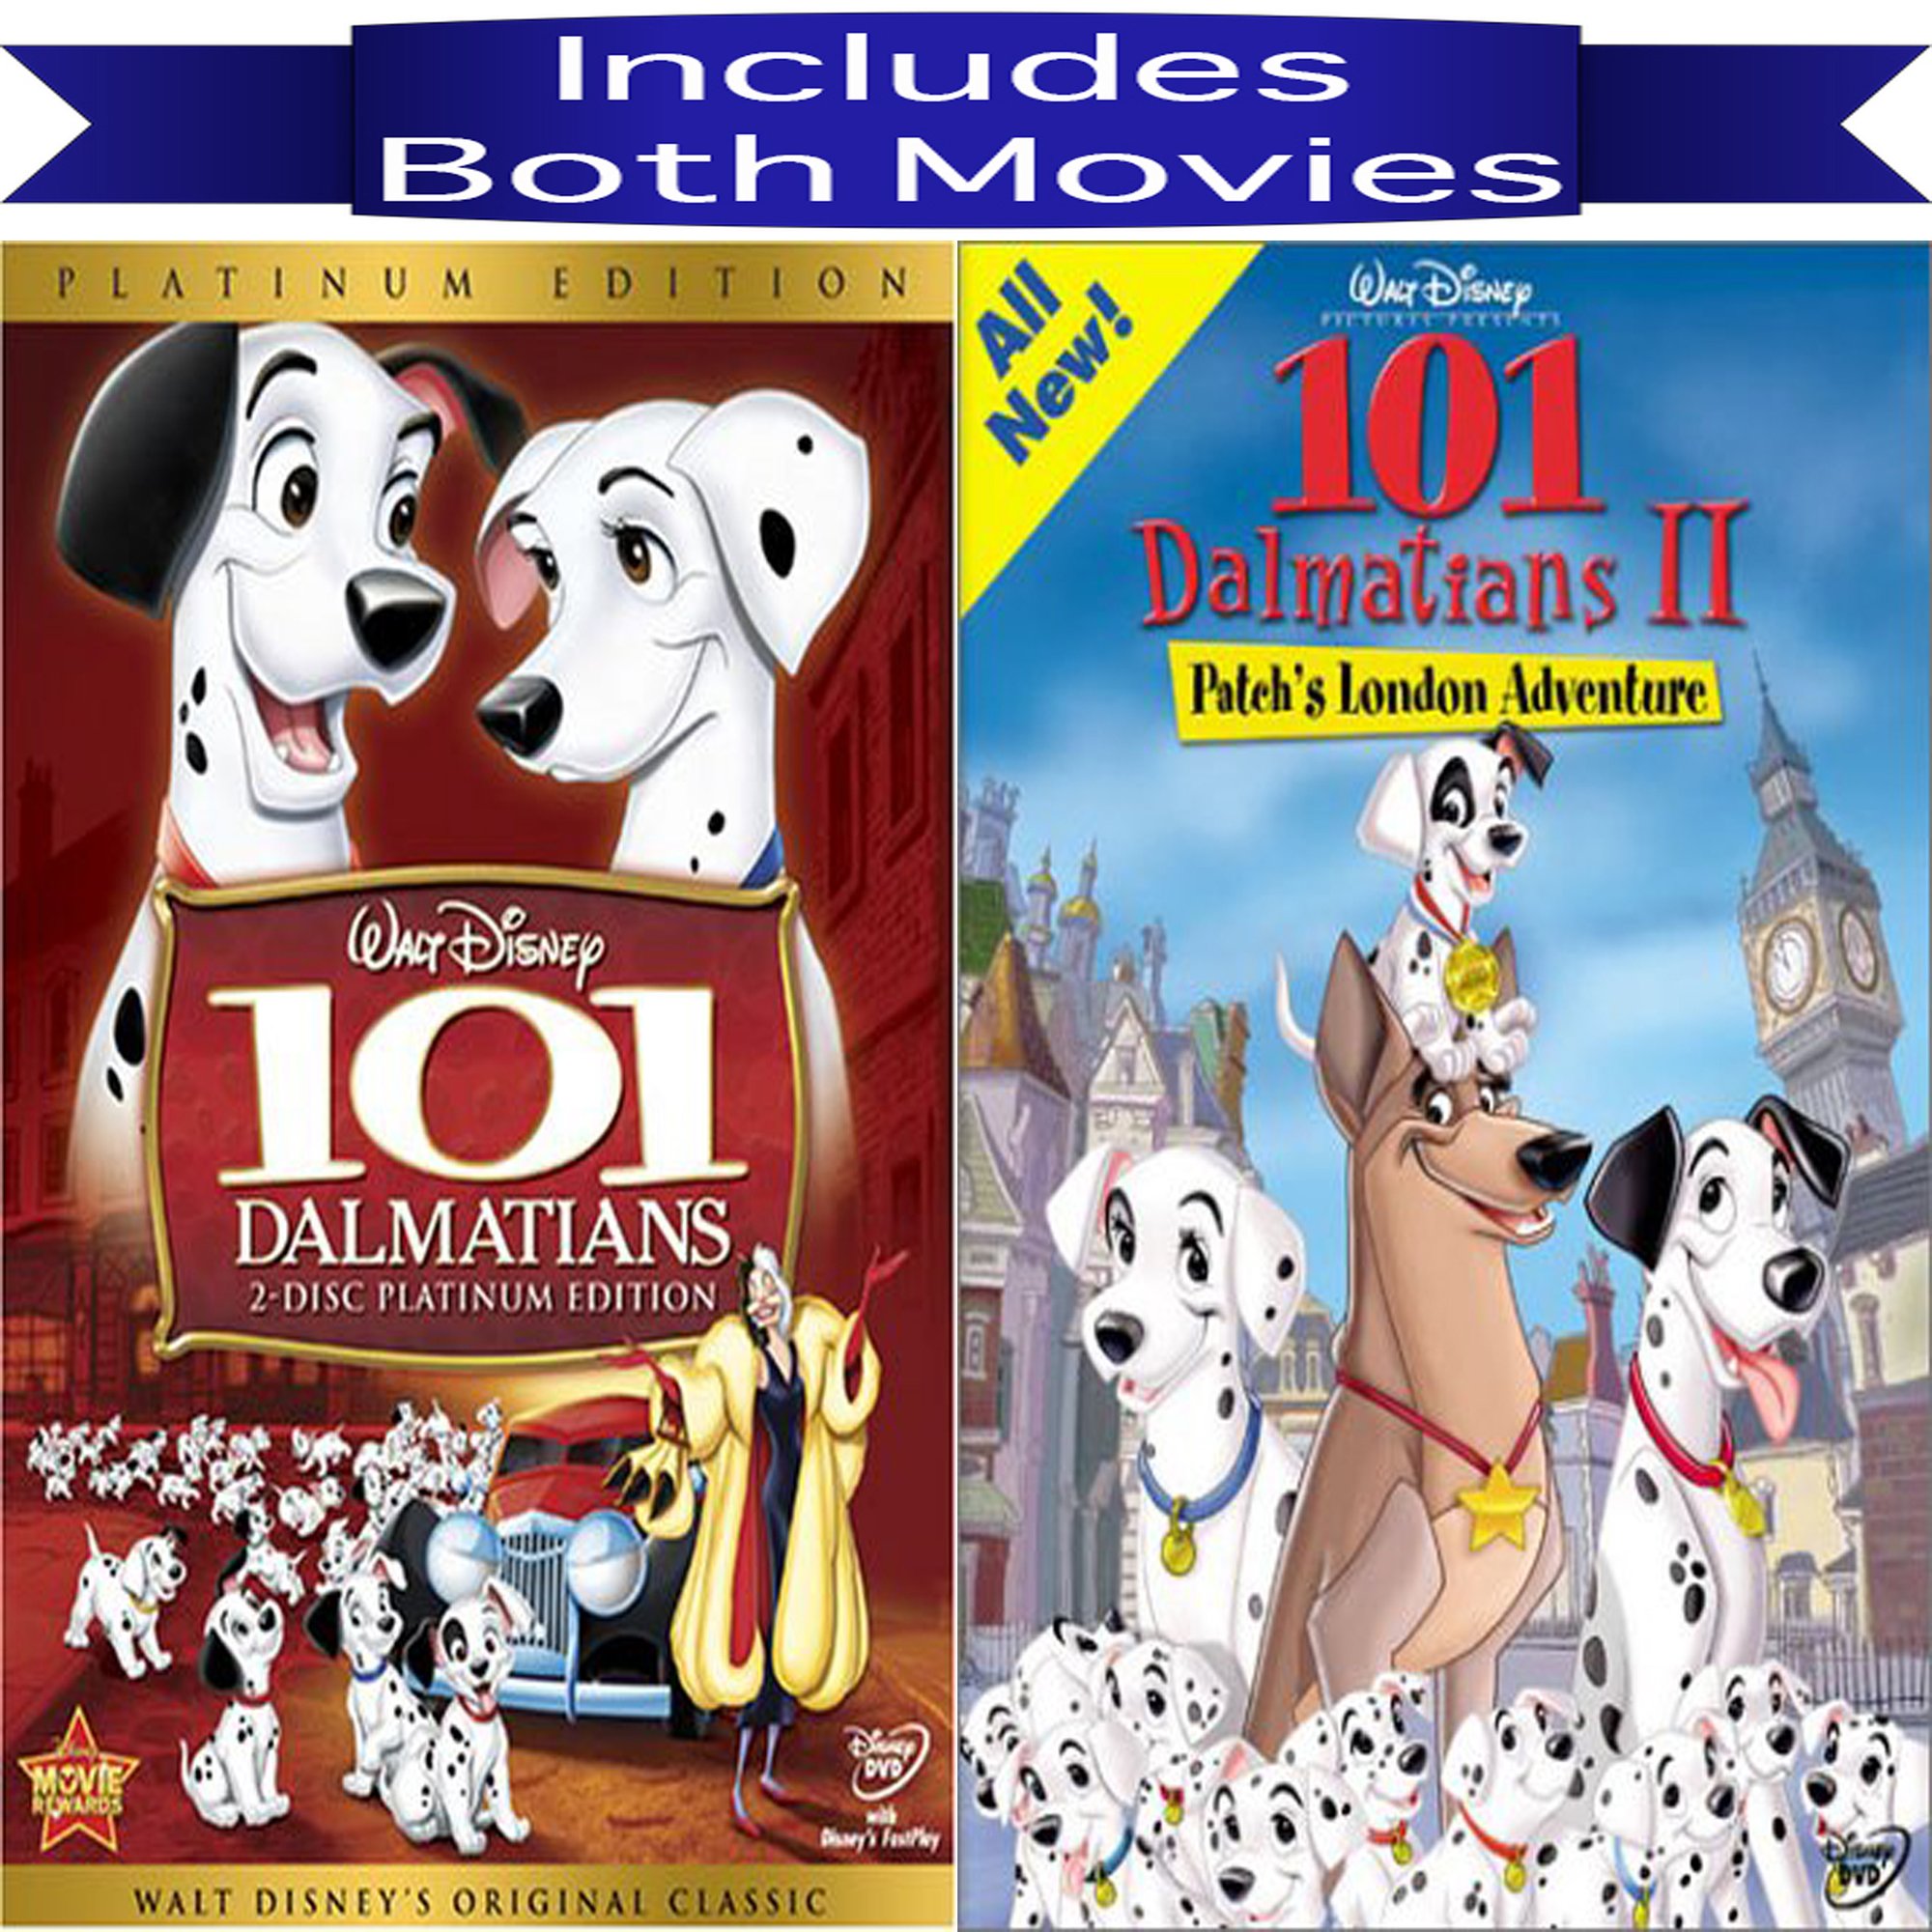 102 dalmatians free online